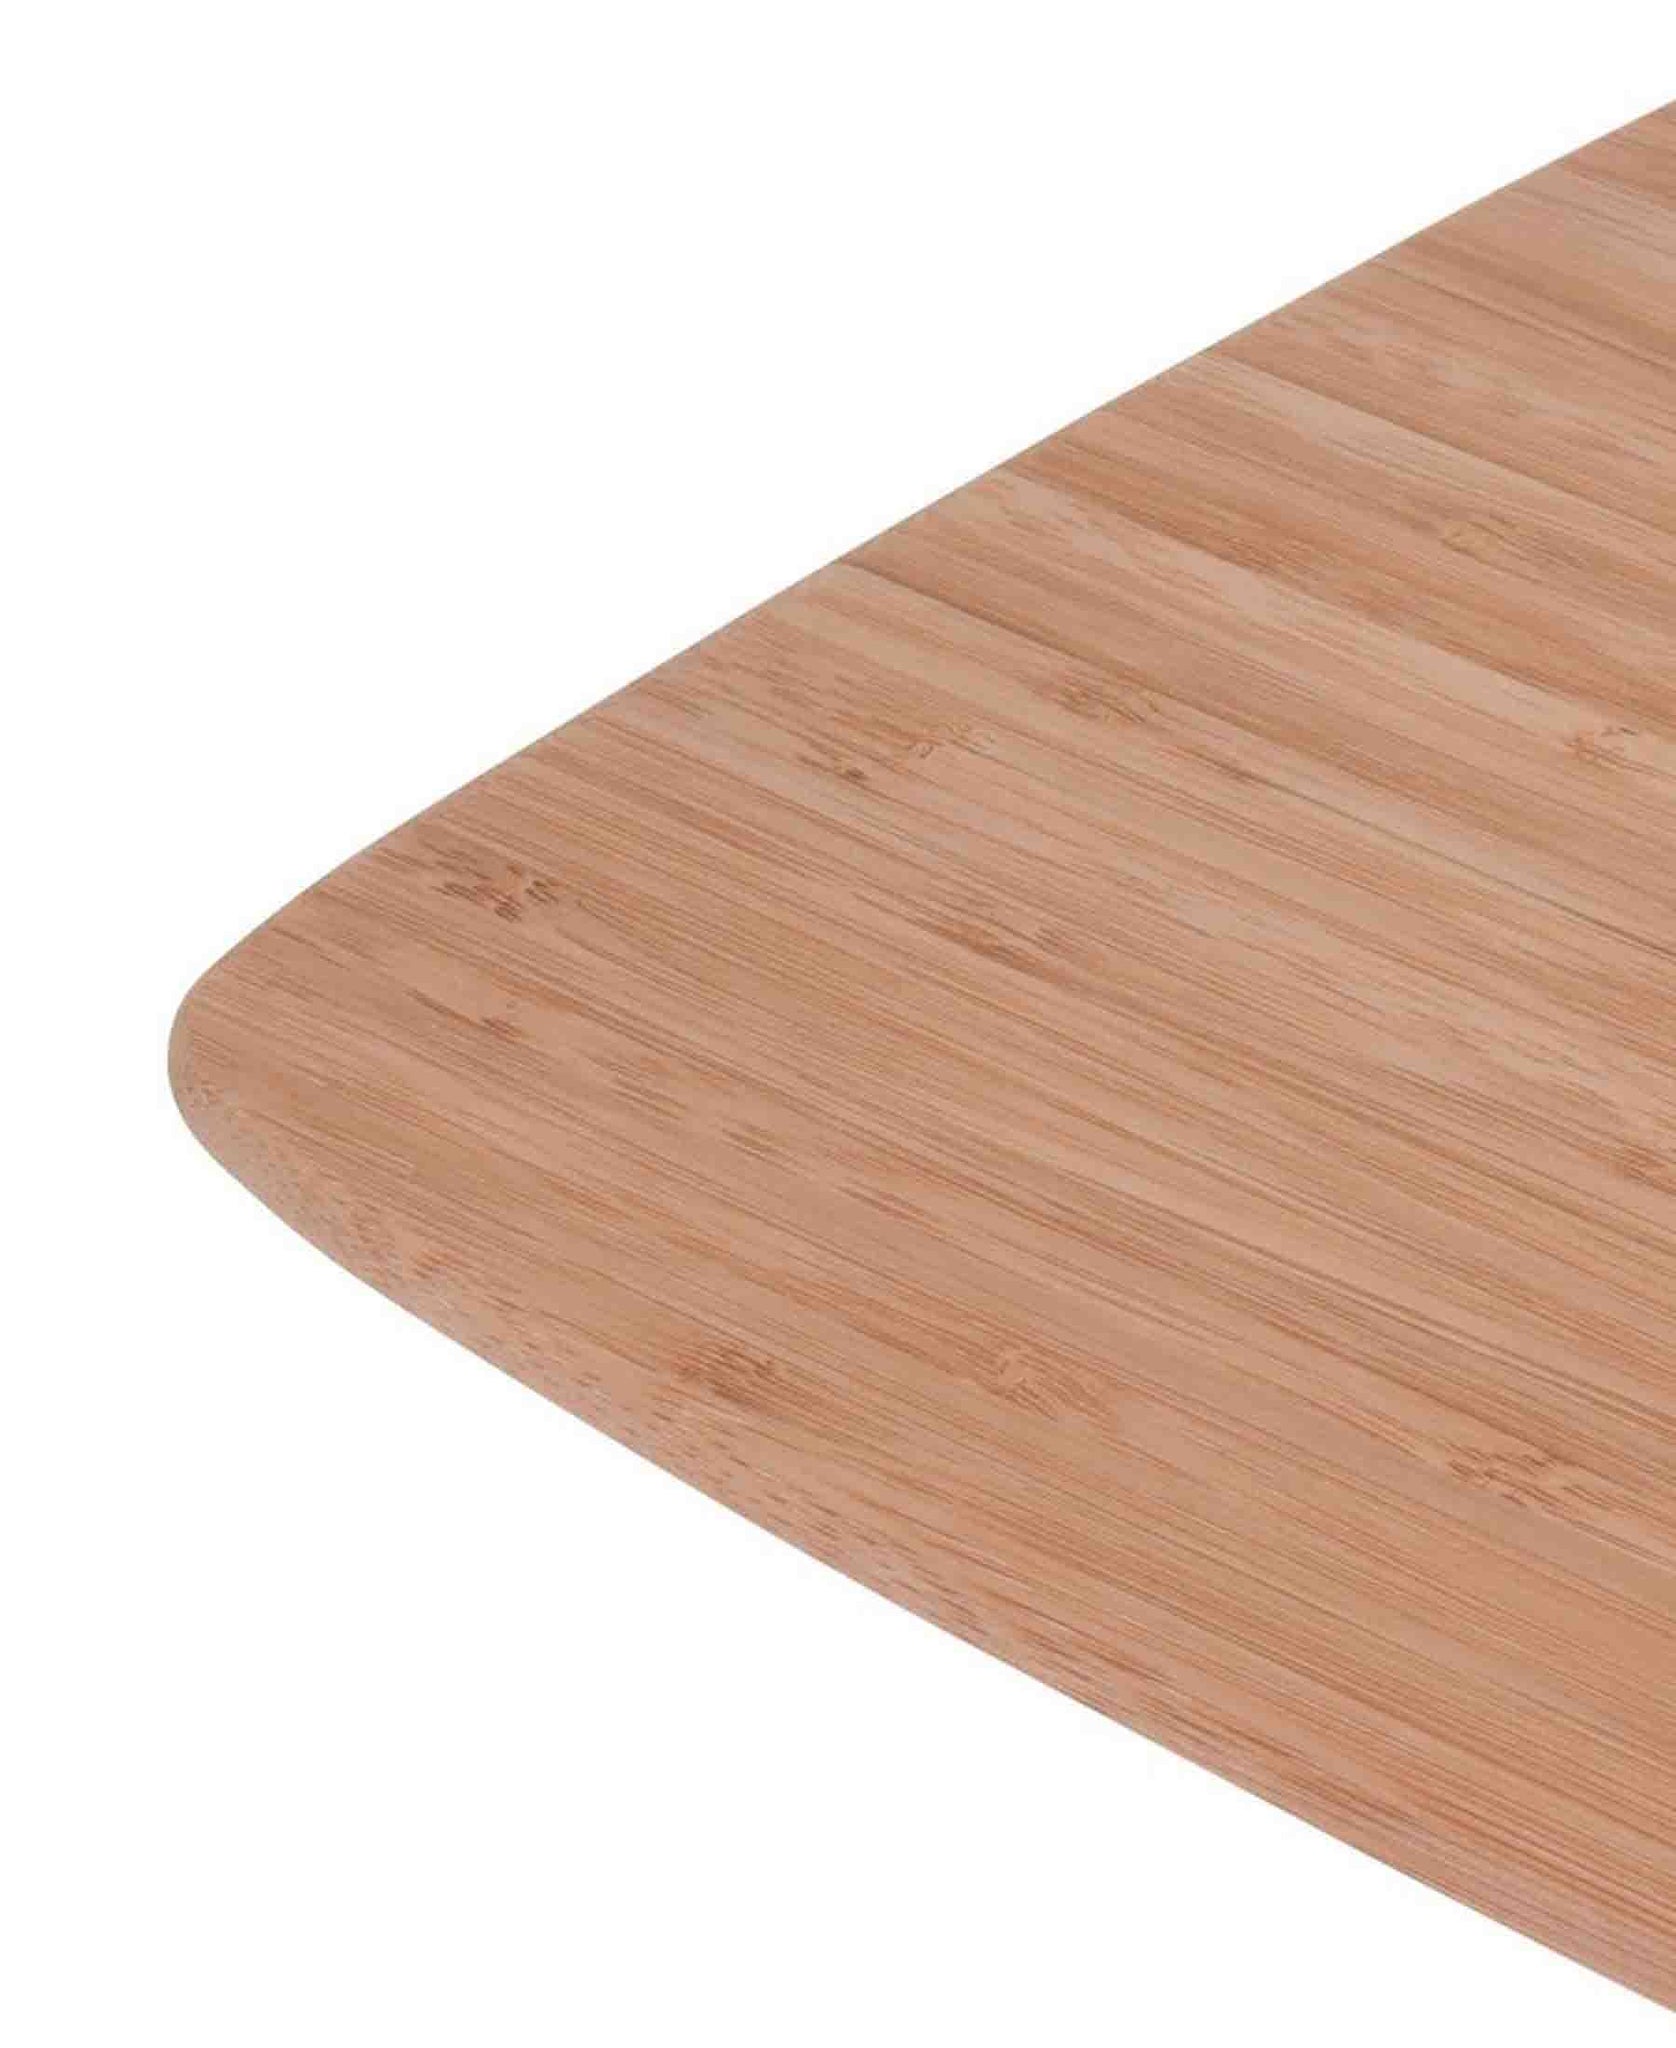 Excellent Houseware 35 x 25cm Cutting Board - Oak